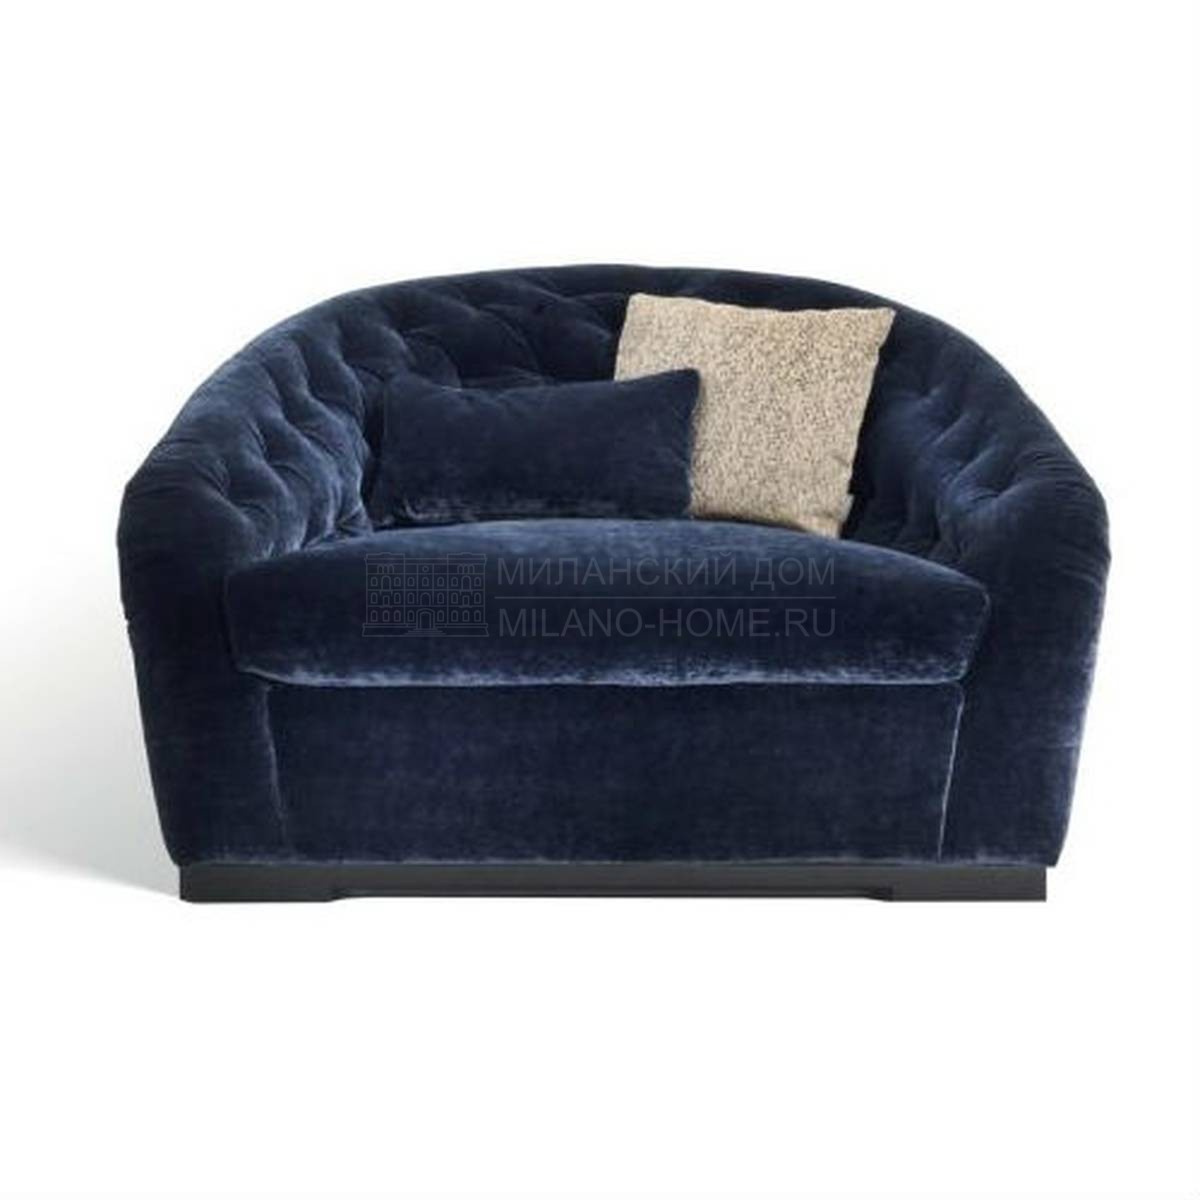 Прямой диван Colbert sofa из Италии фабрики MEDEA (Life style)